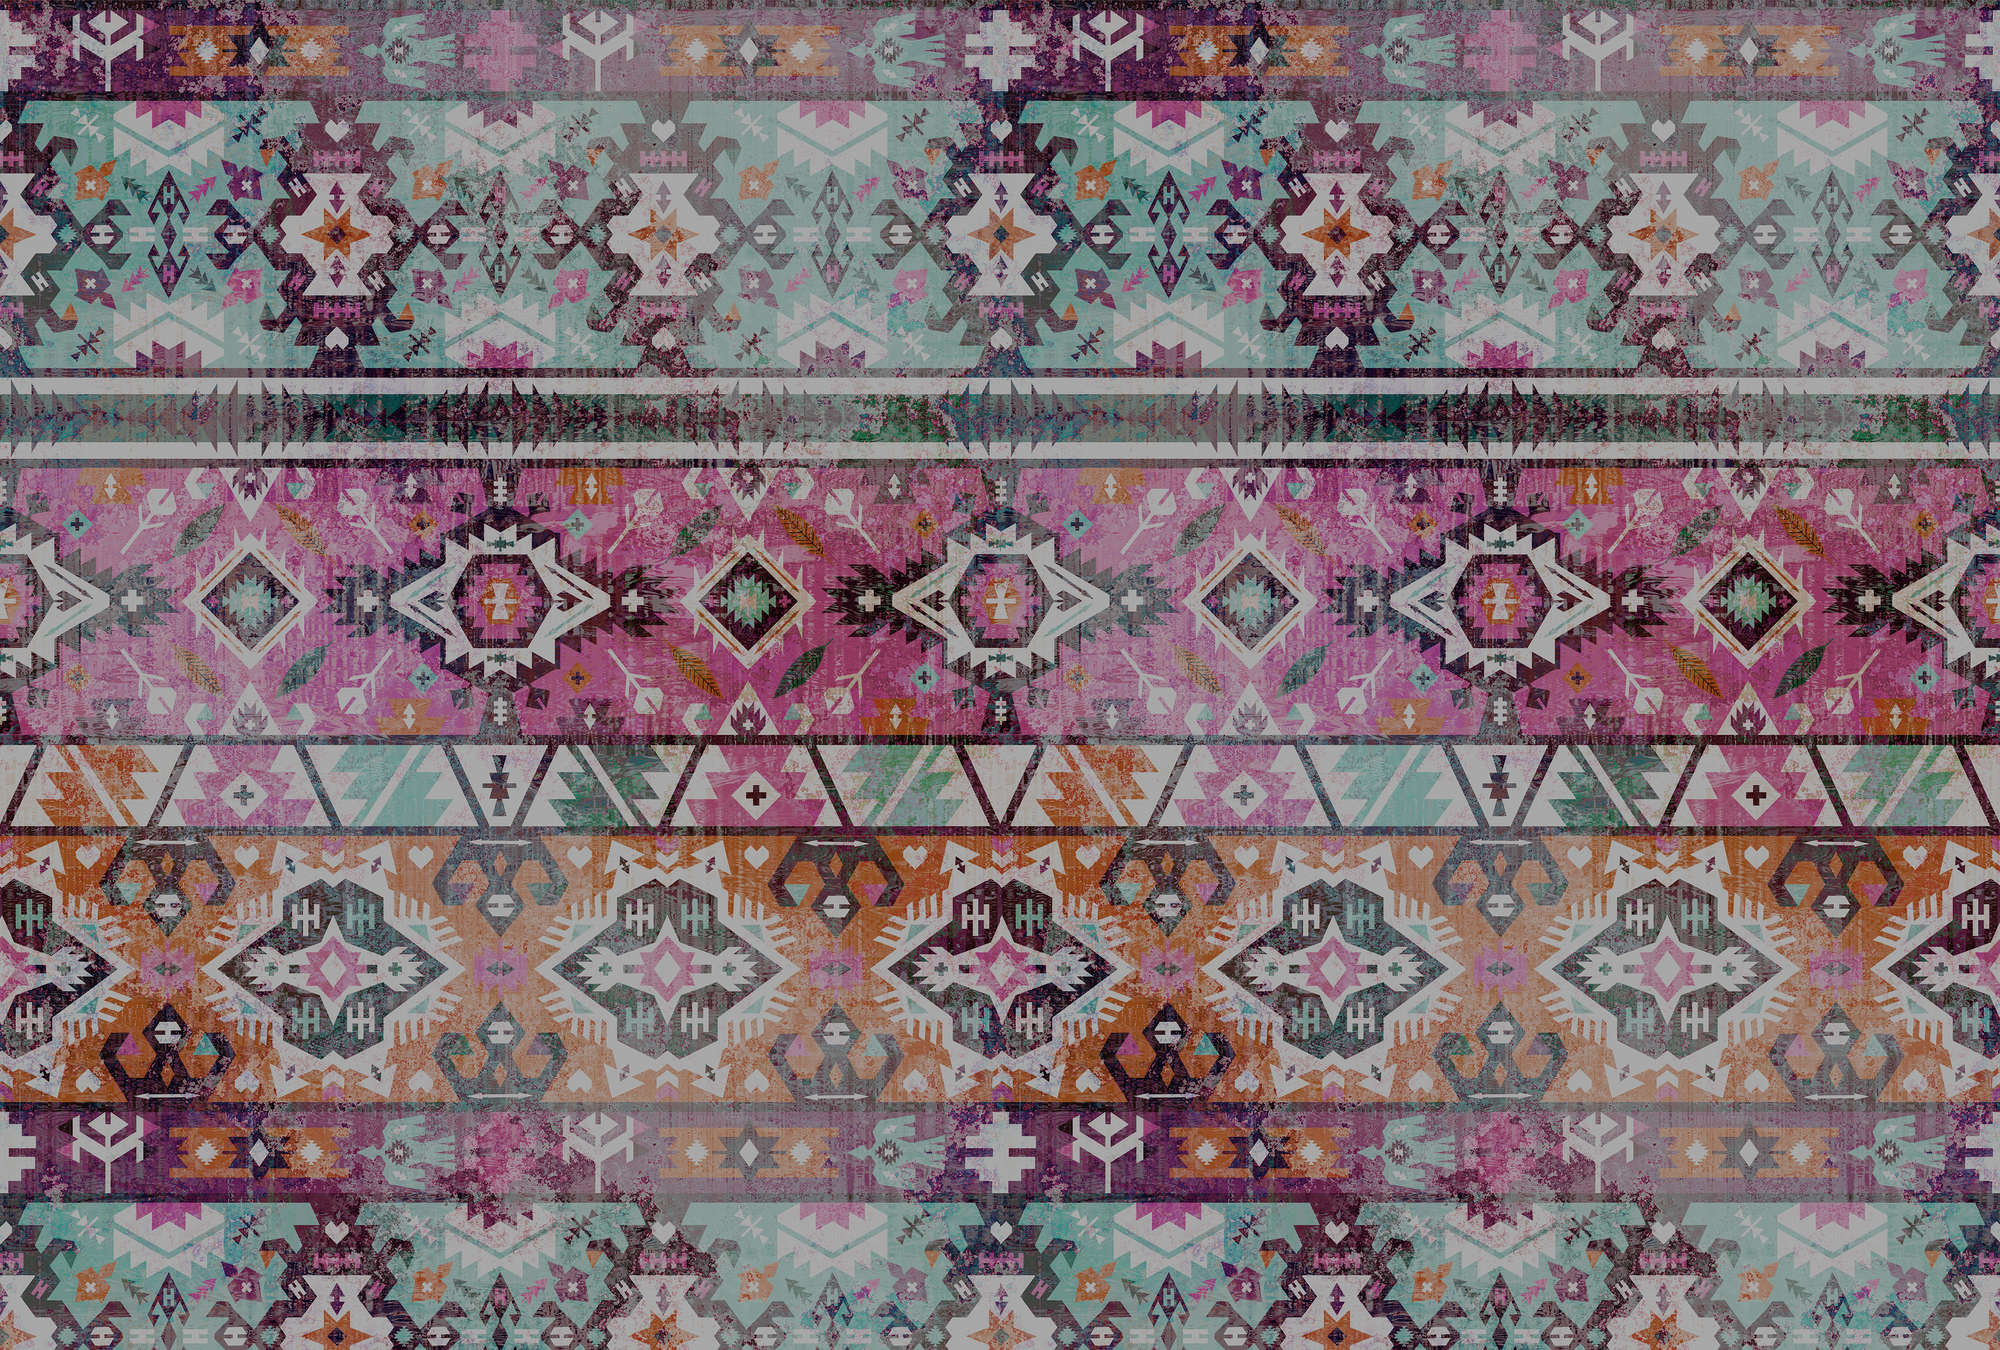             Photo wallpaper ethnic textile pattern, geometric - pink, blue
        